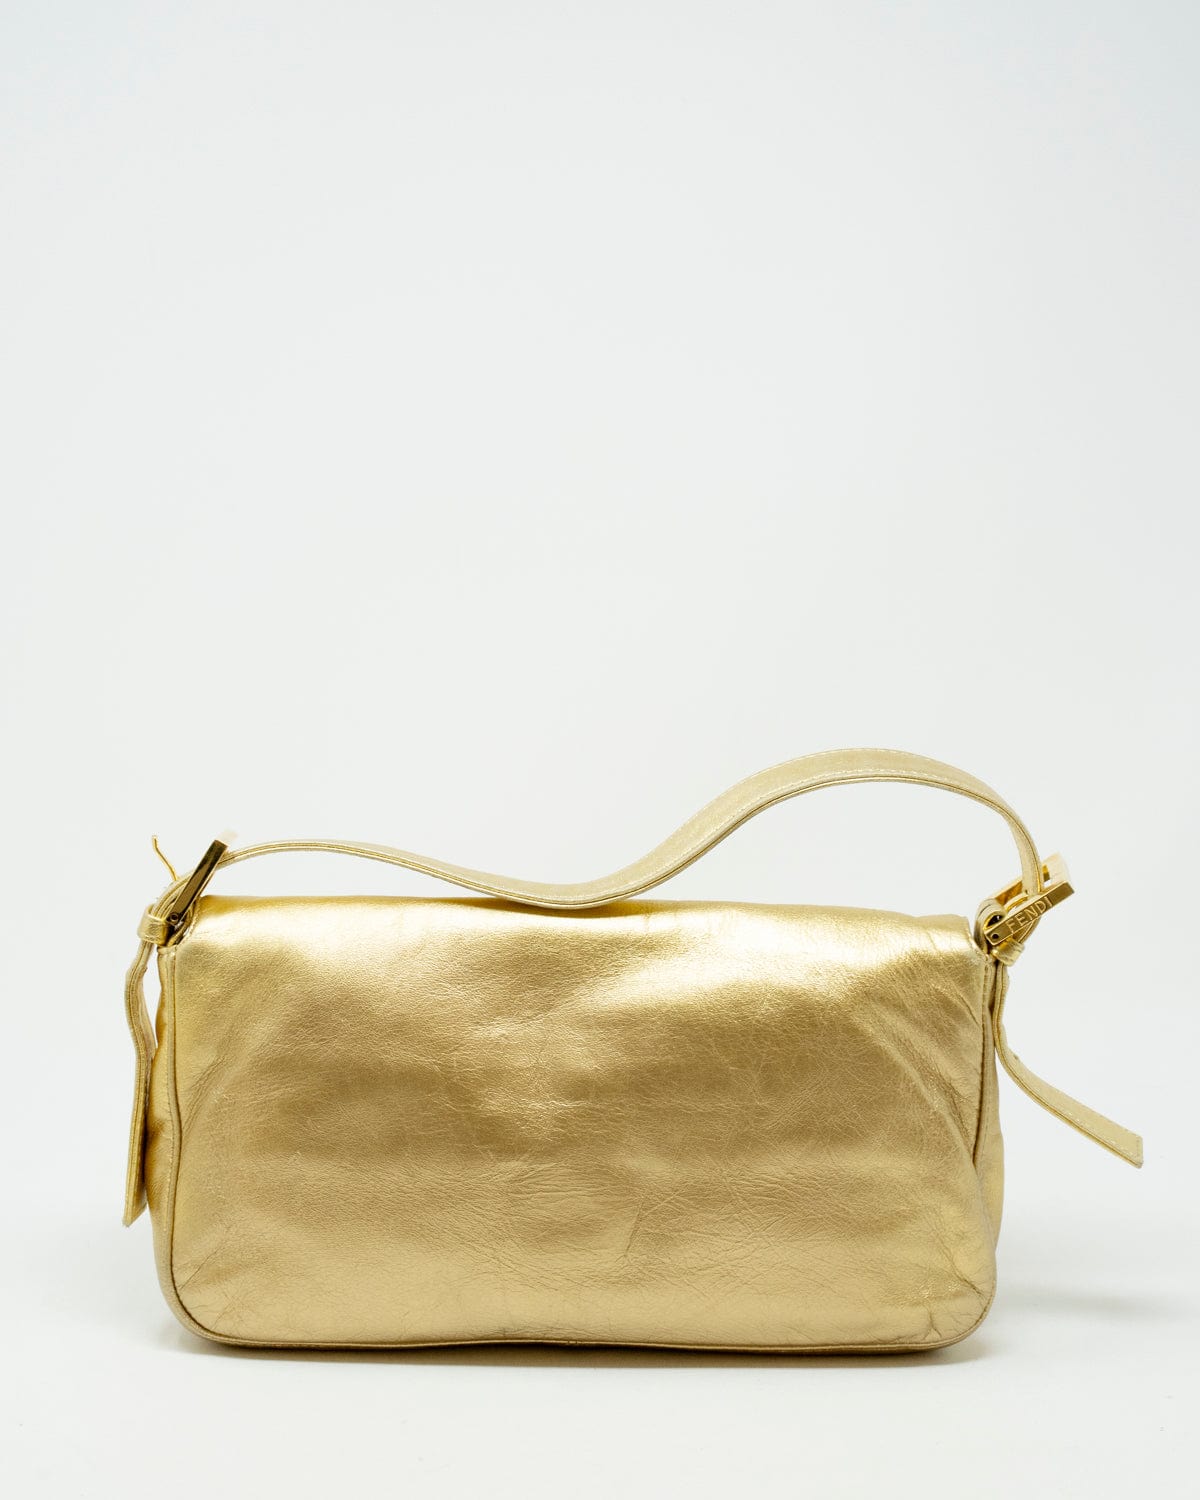 Fendi Fendi limited edition gold nappa leather and crystal baguette bag  ASL3308